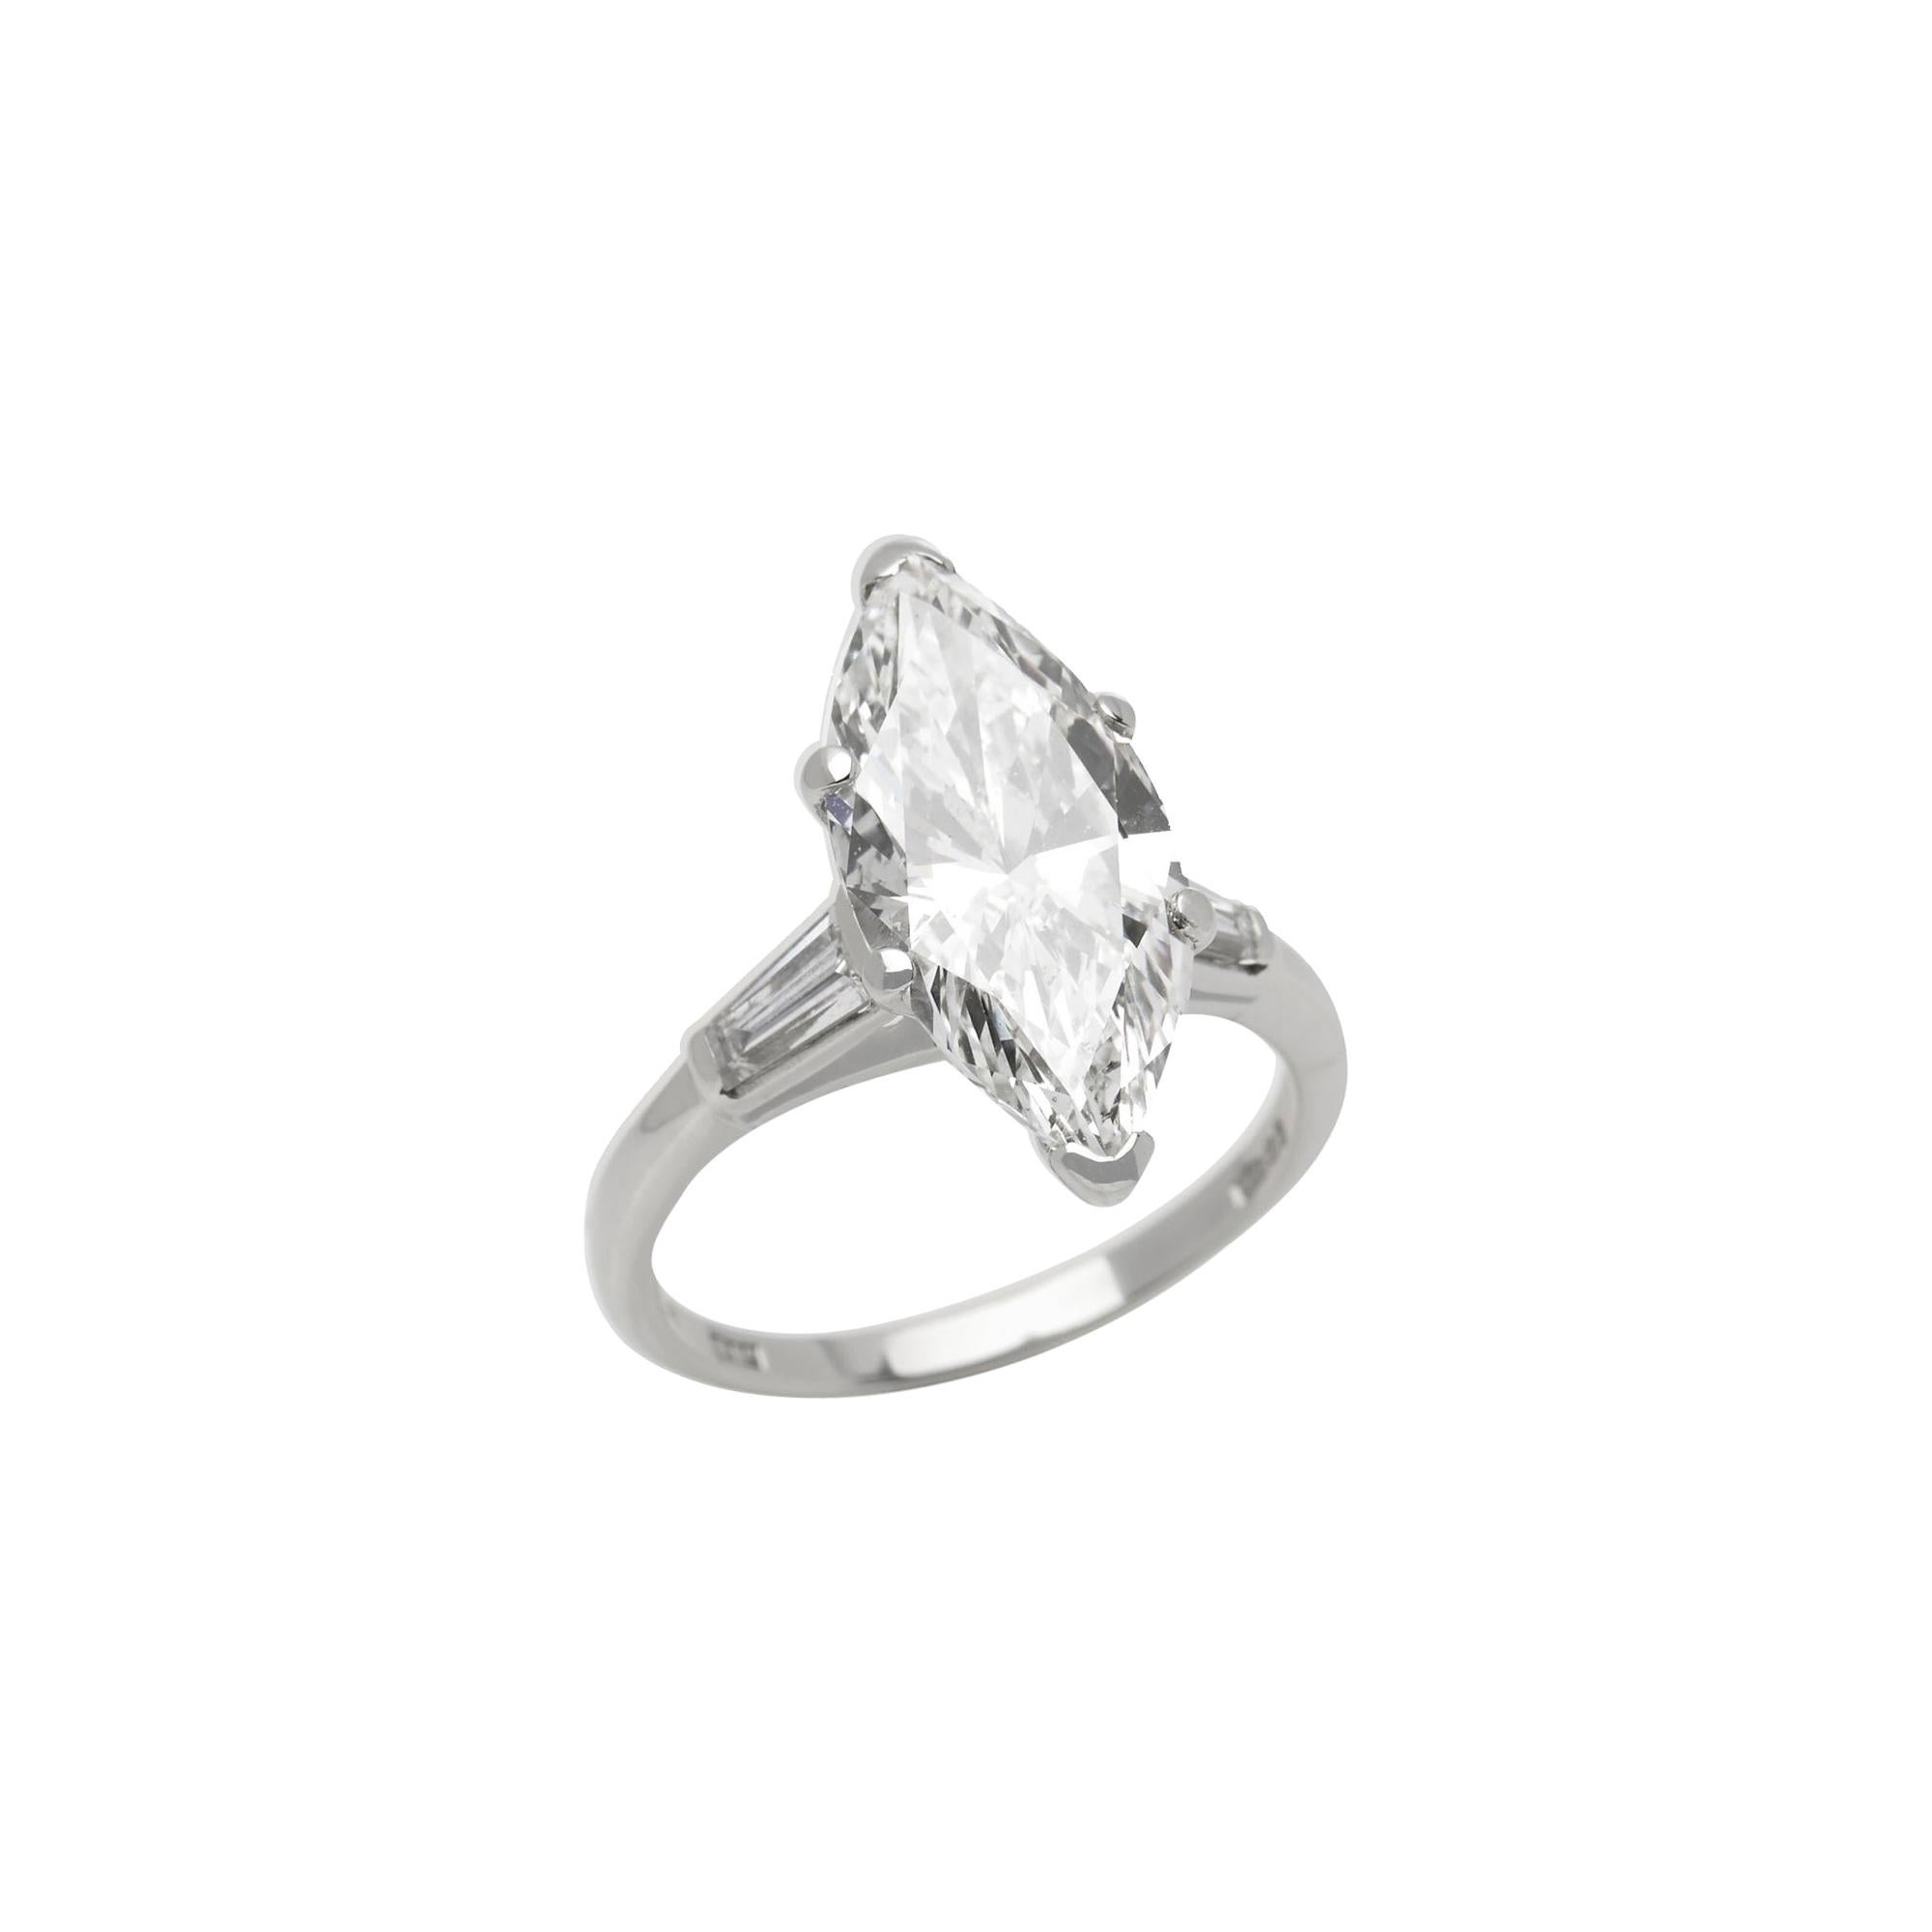 Platinum 4.18 Carat Certified Marquise Cut Diamond Engagement Ring